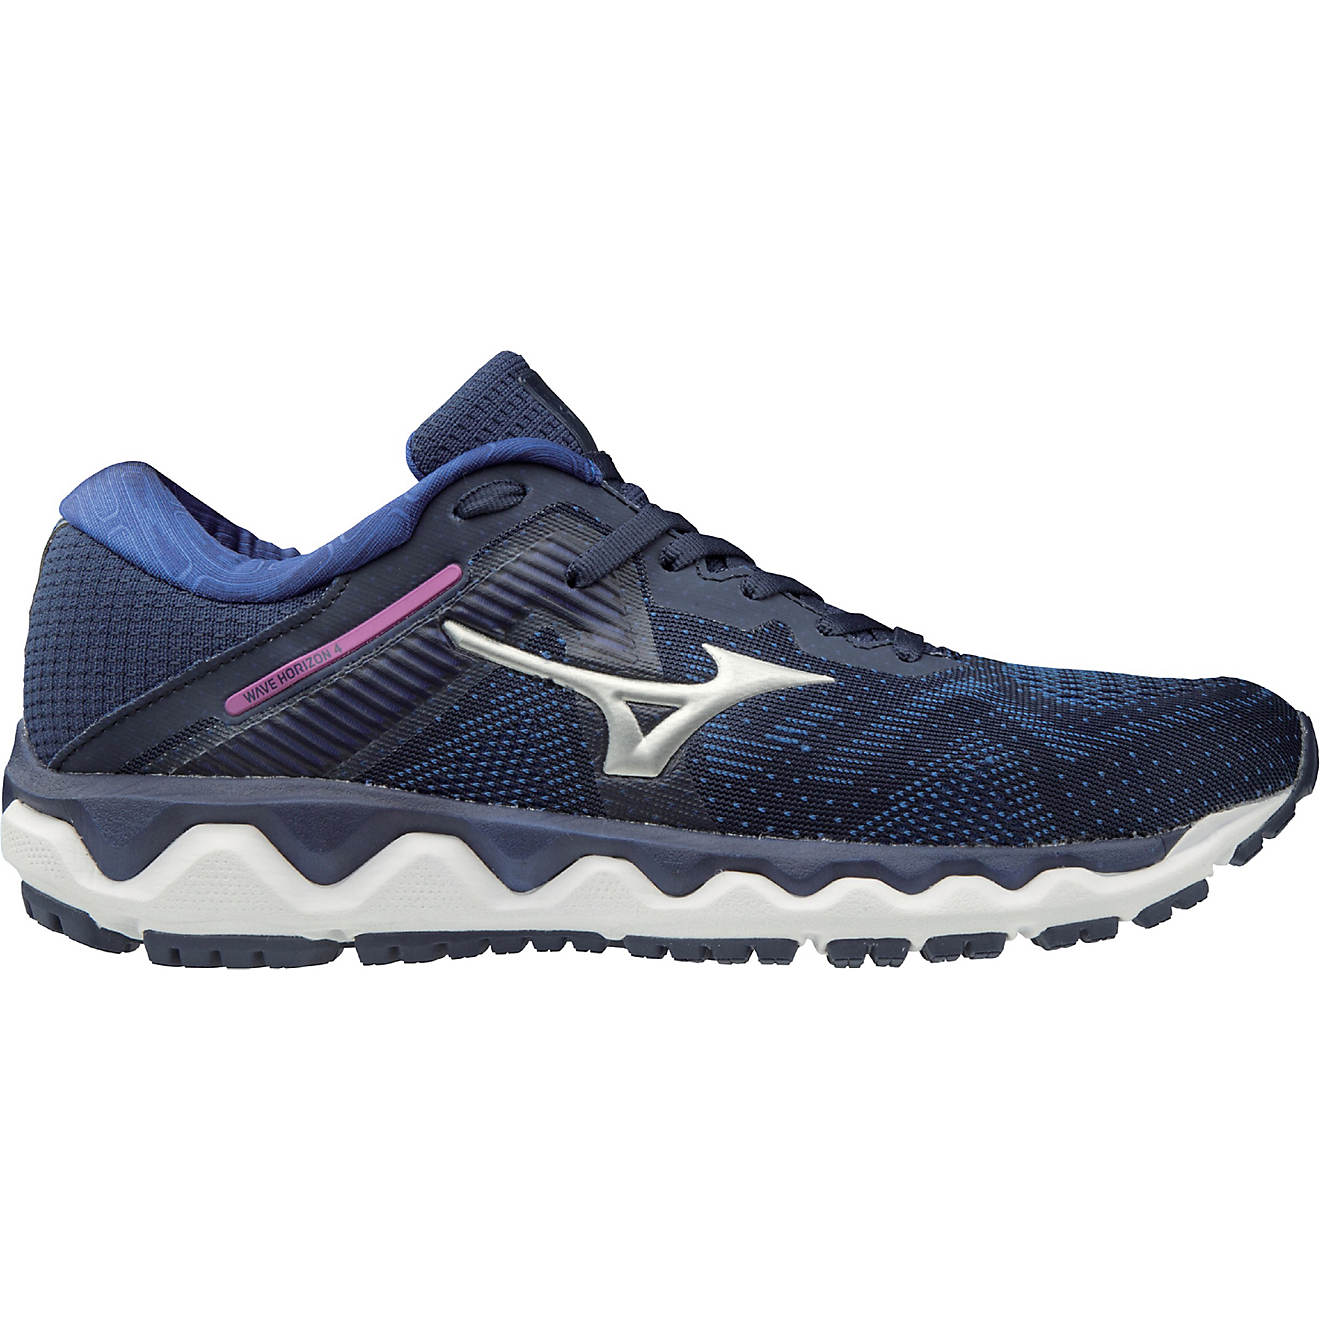 Black/GlacierGray/Champagne Mizuno Wave Horizon 4 Women's Road Running Shoes 